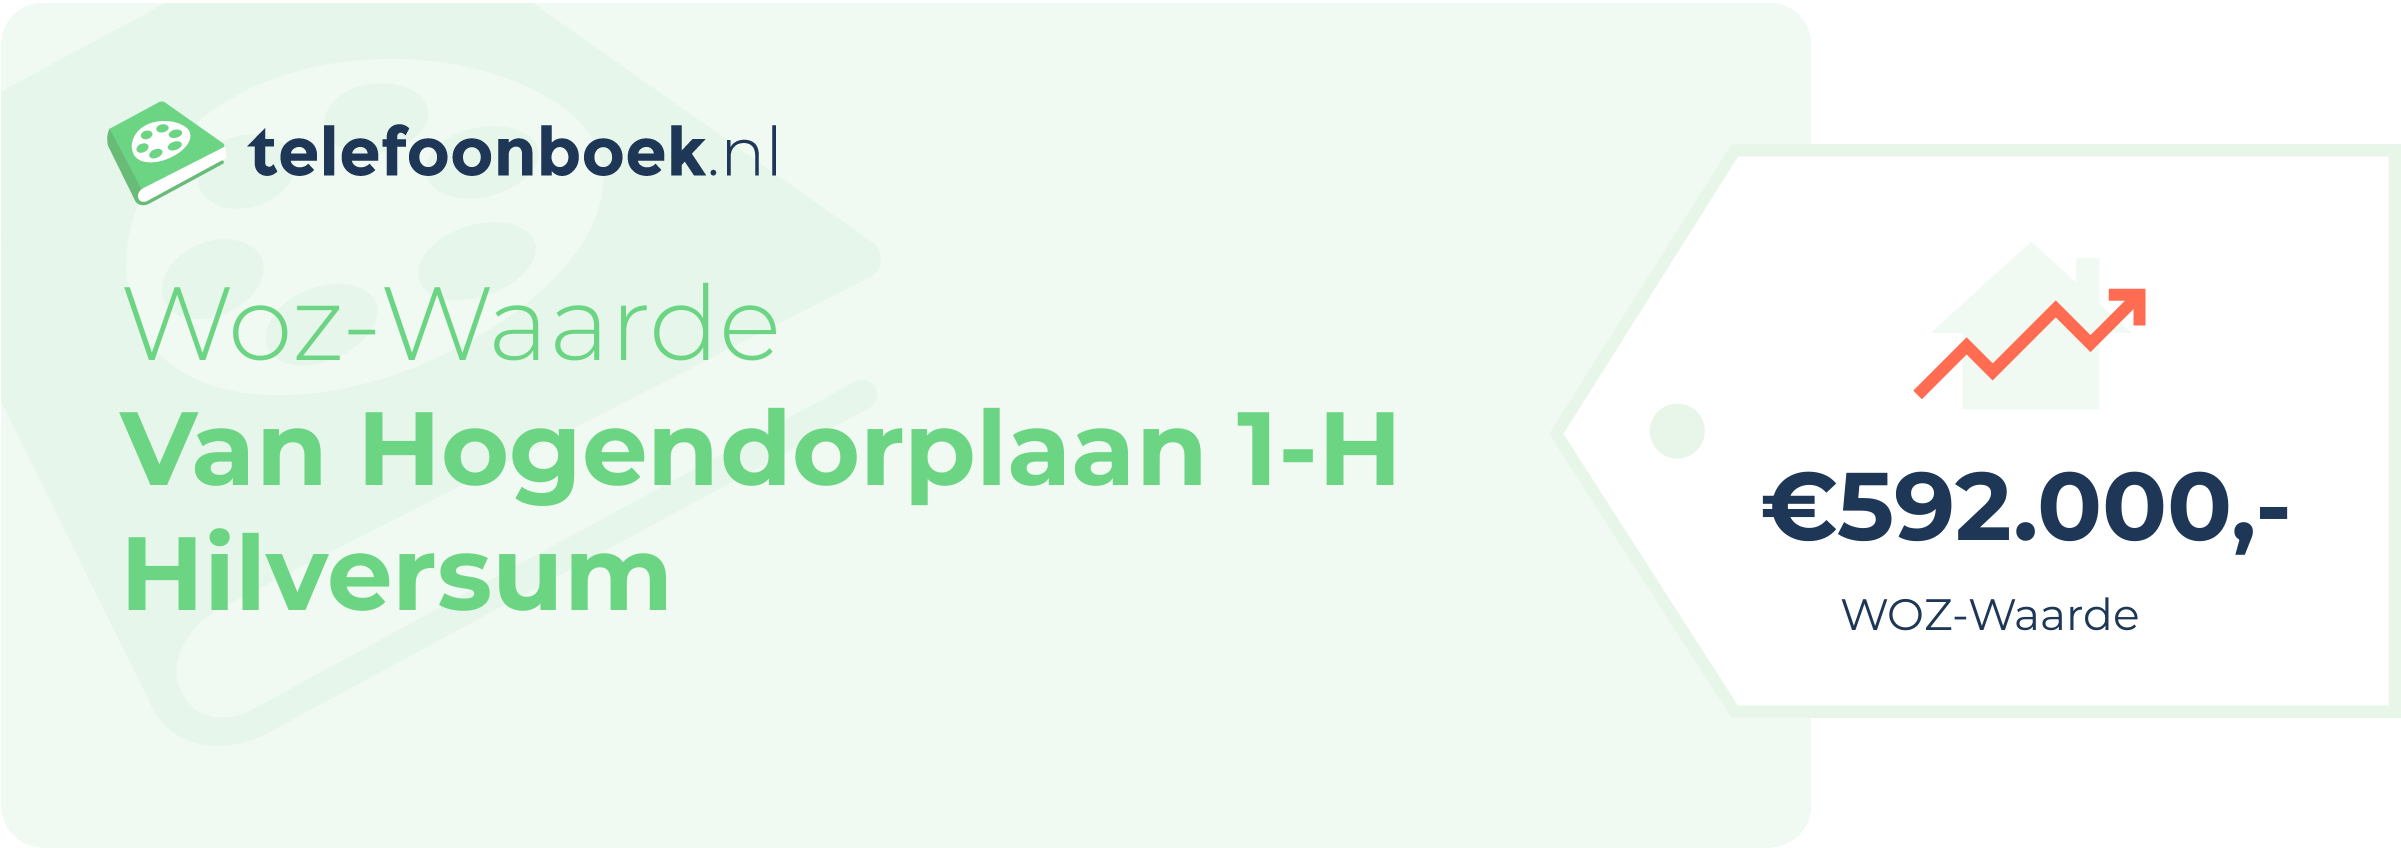 WOZ-waarde Van Hogendorplaan 1-H Hilversum